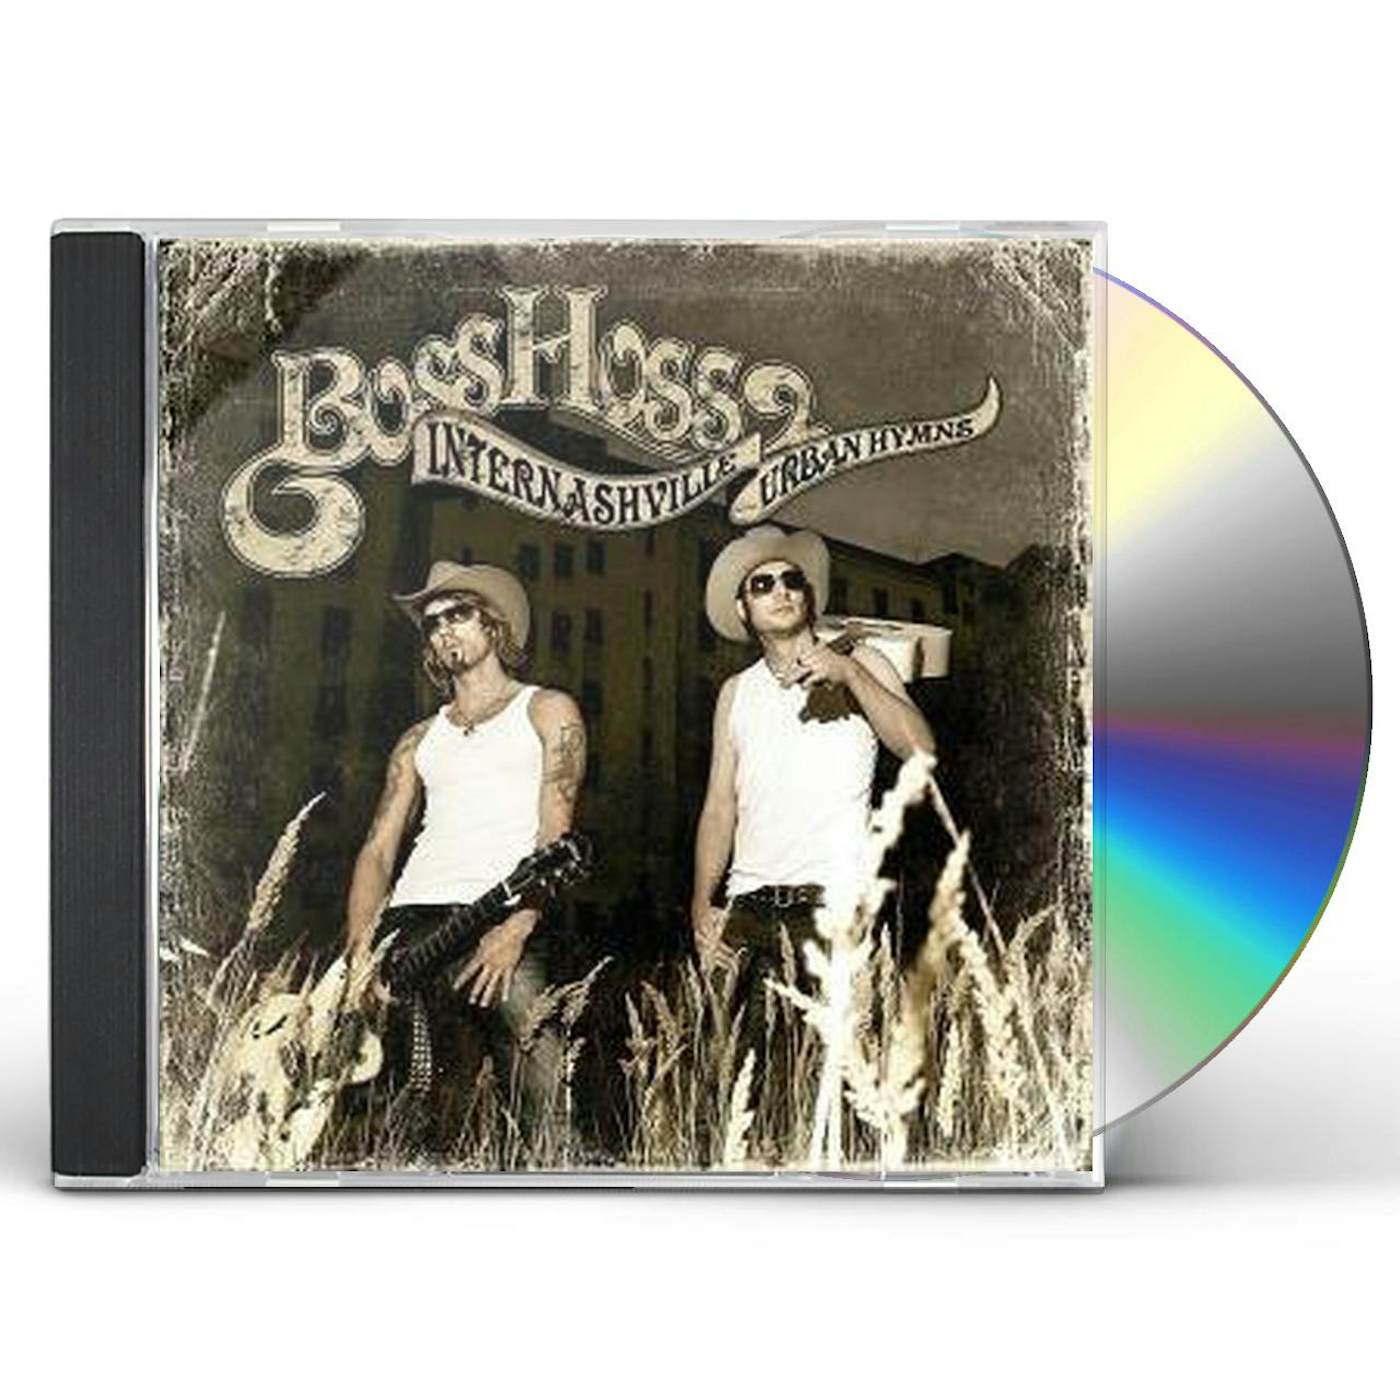 The BossHoss INTERNASHVILLE URBAN HYMN CD